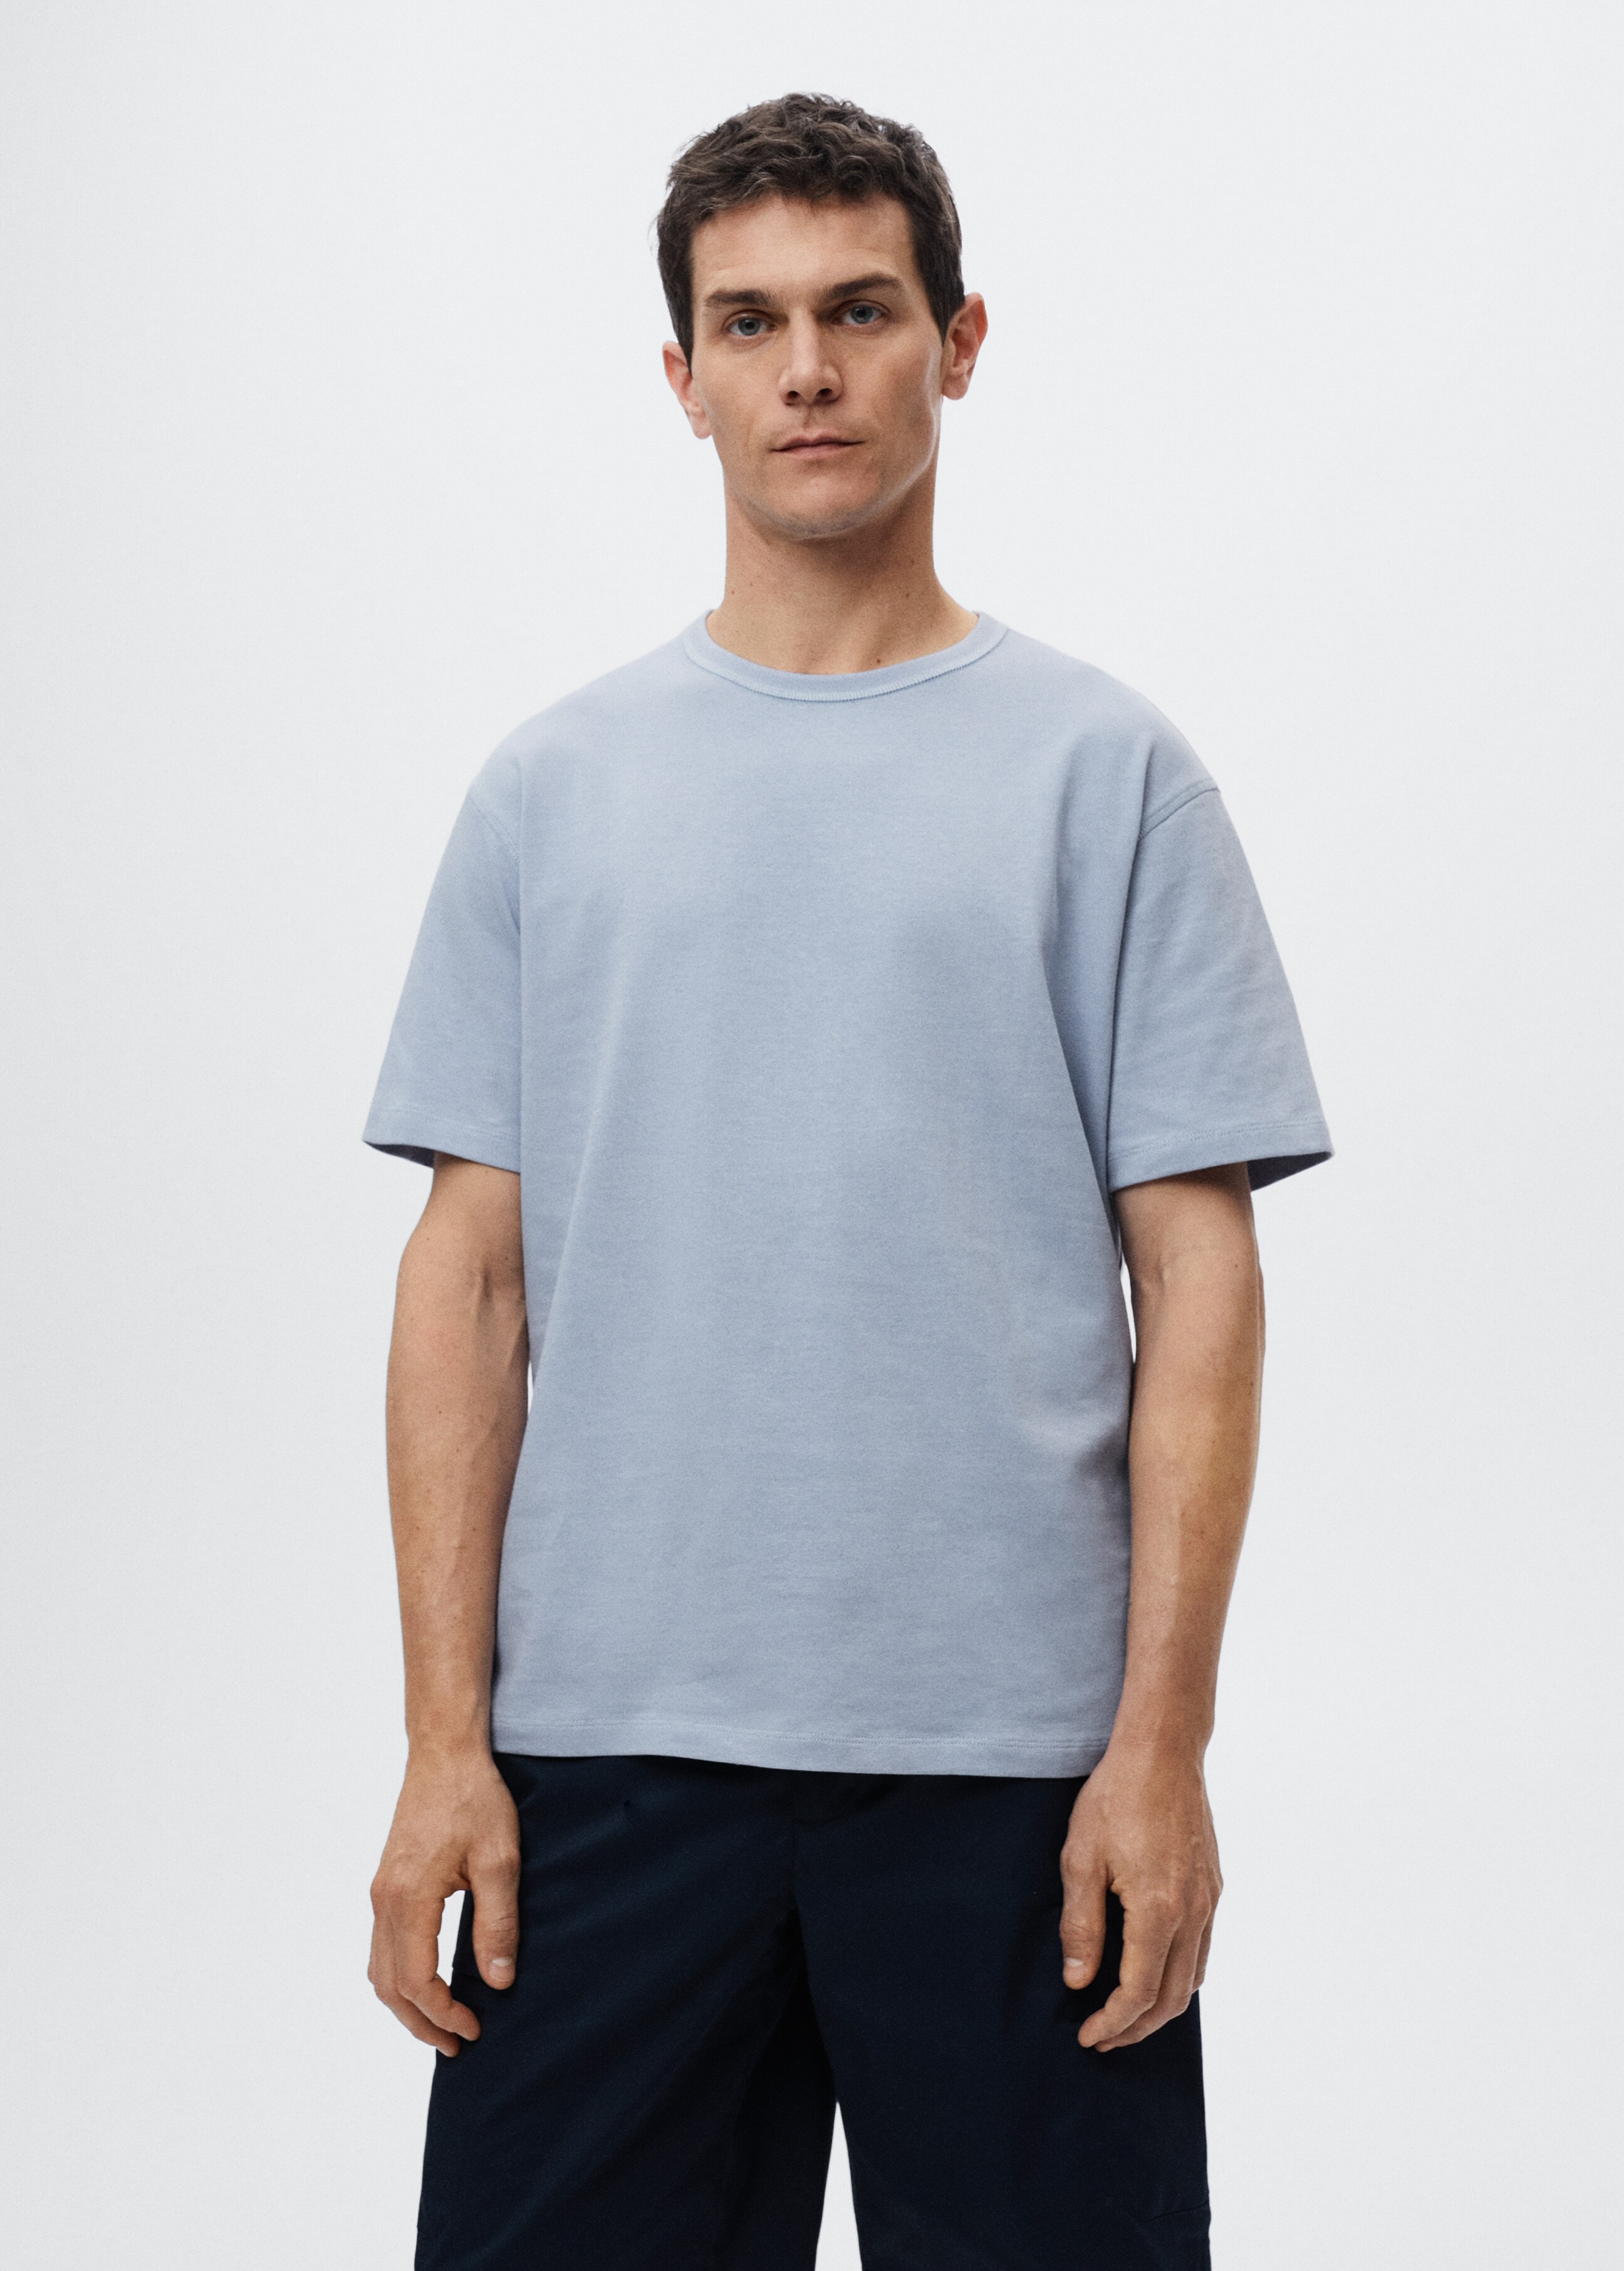 Camiseta algodón relaxed fit - Plano medio